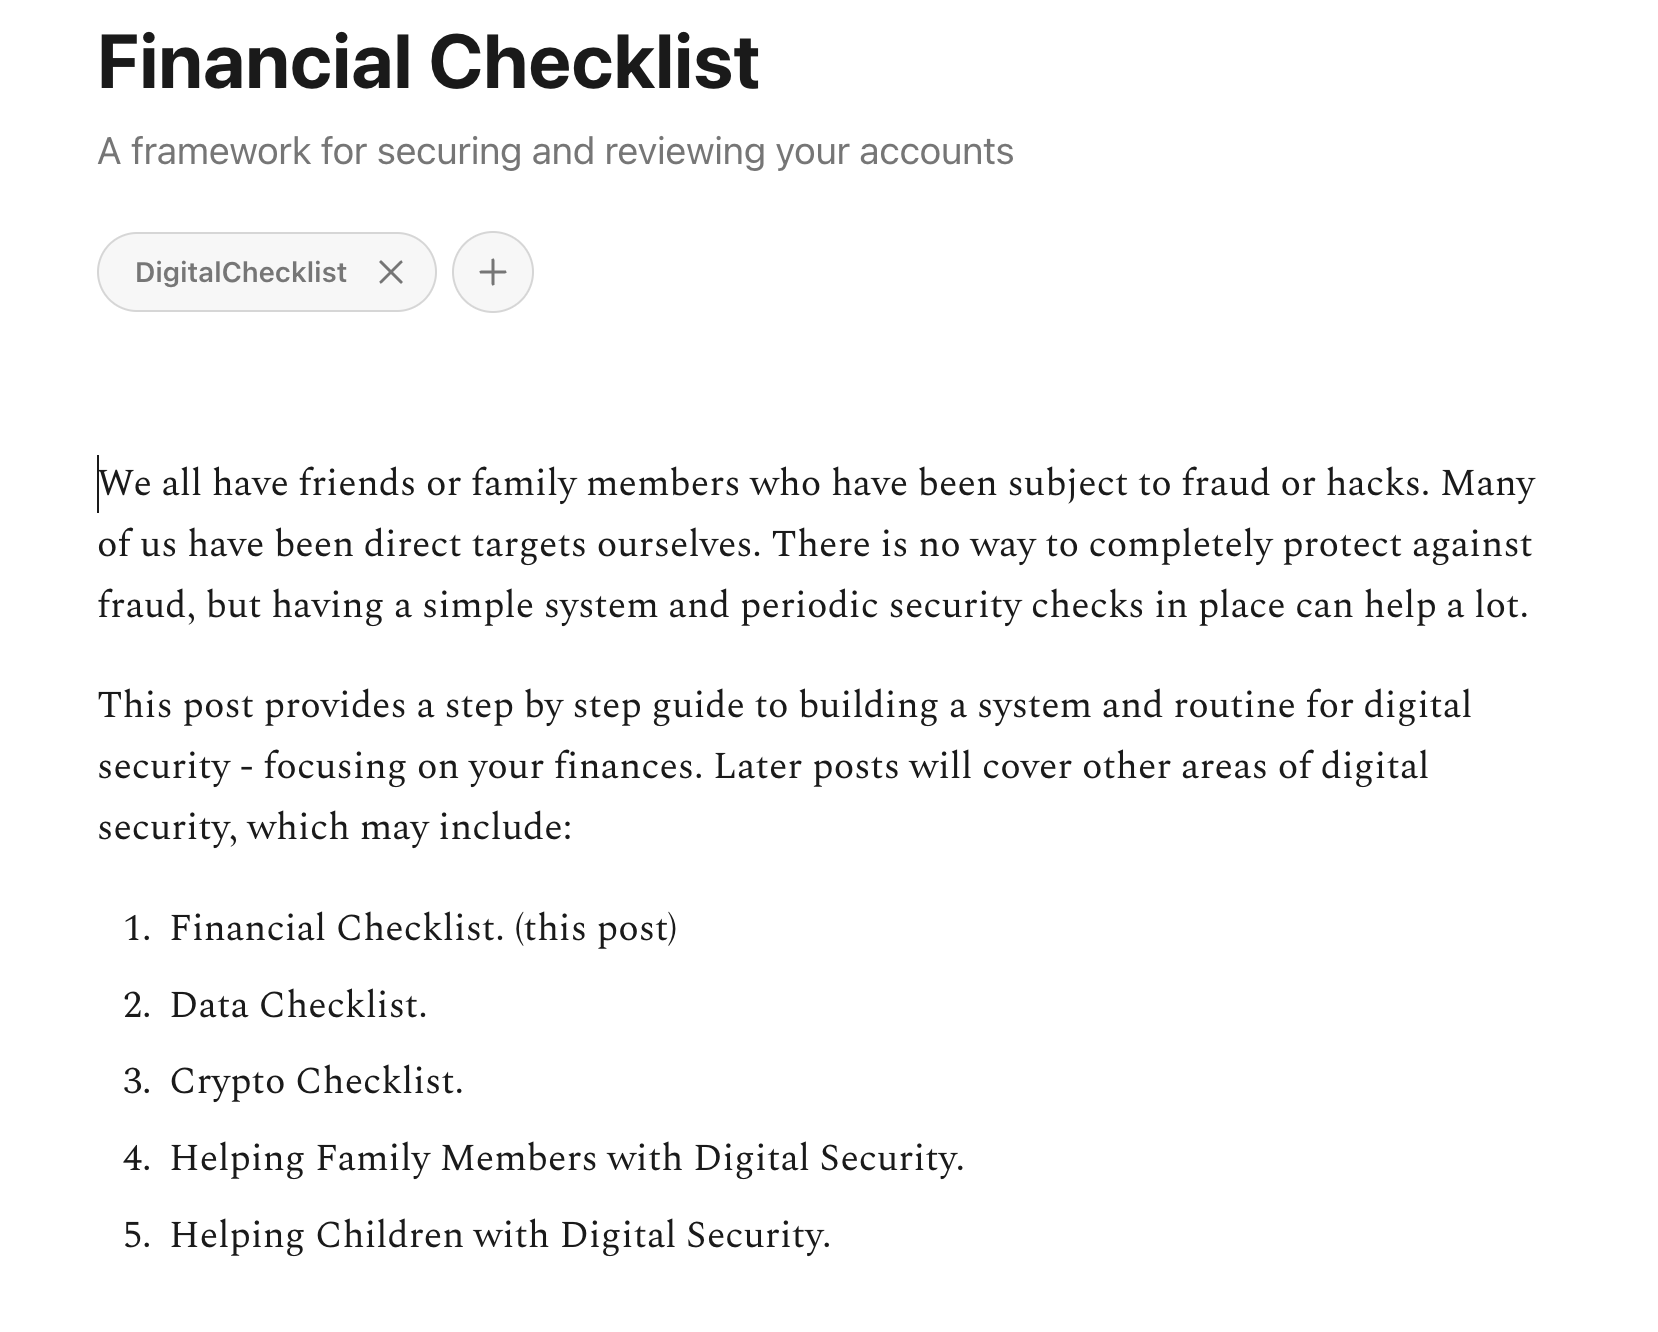 Digital Checklist